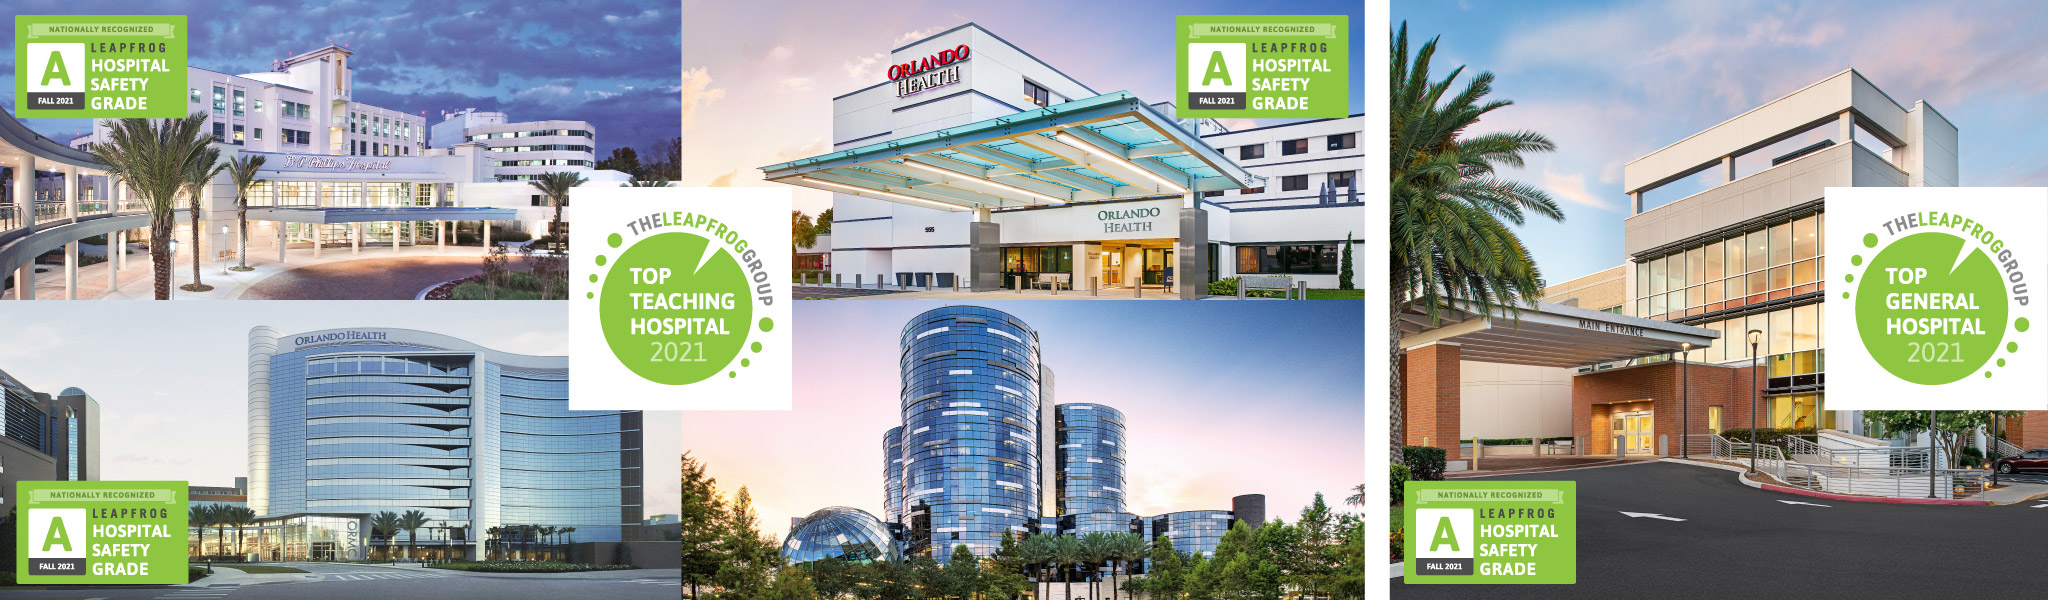 Orlando Health Facilities - The Leapfrog Top Teaching Hospital 2021 Award